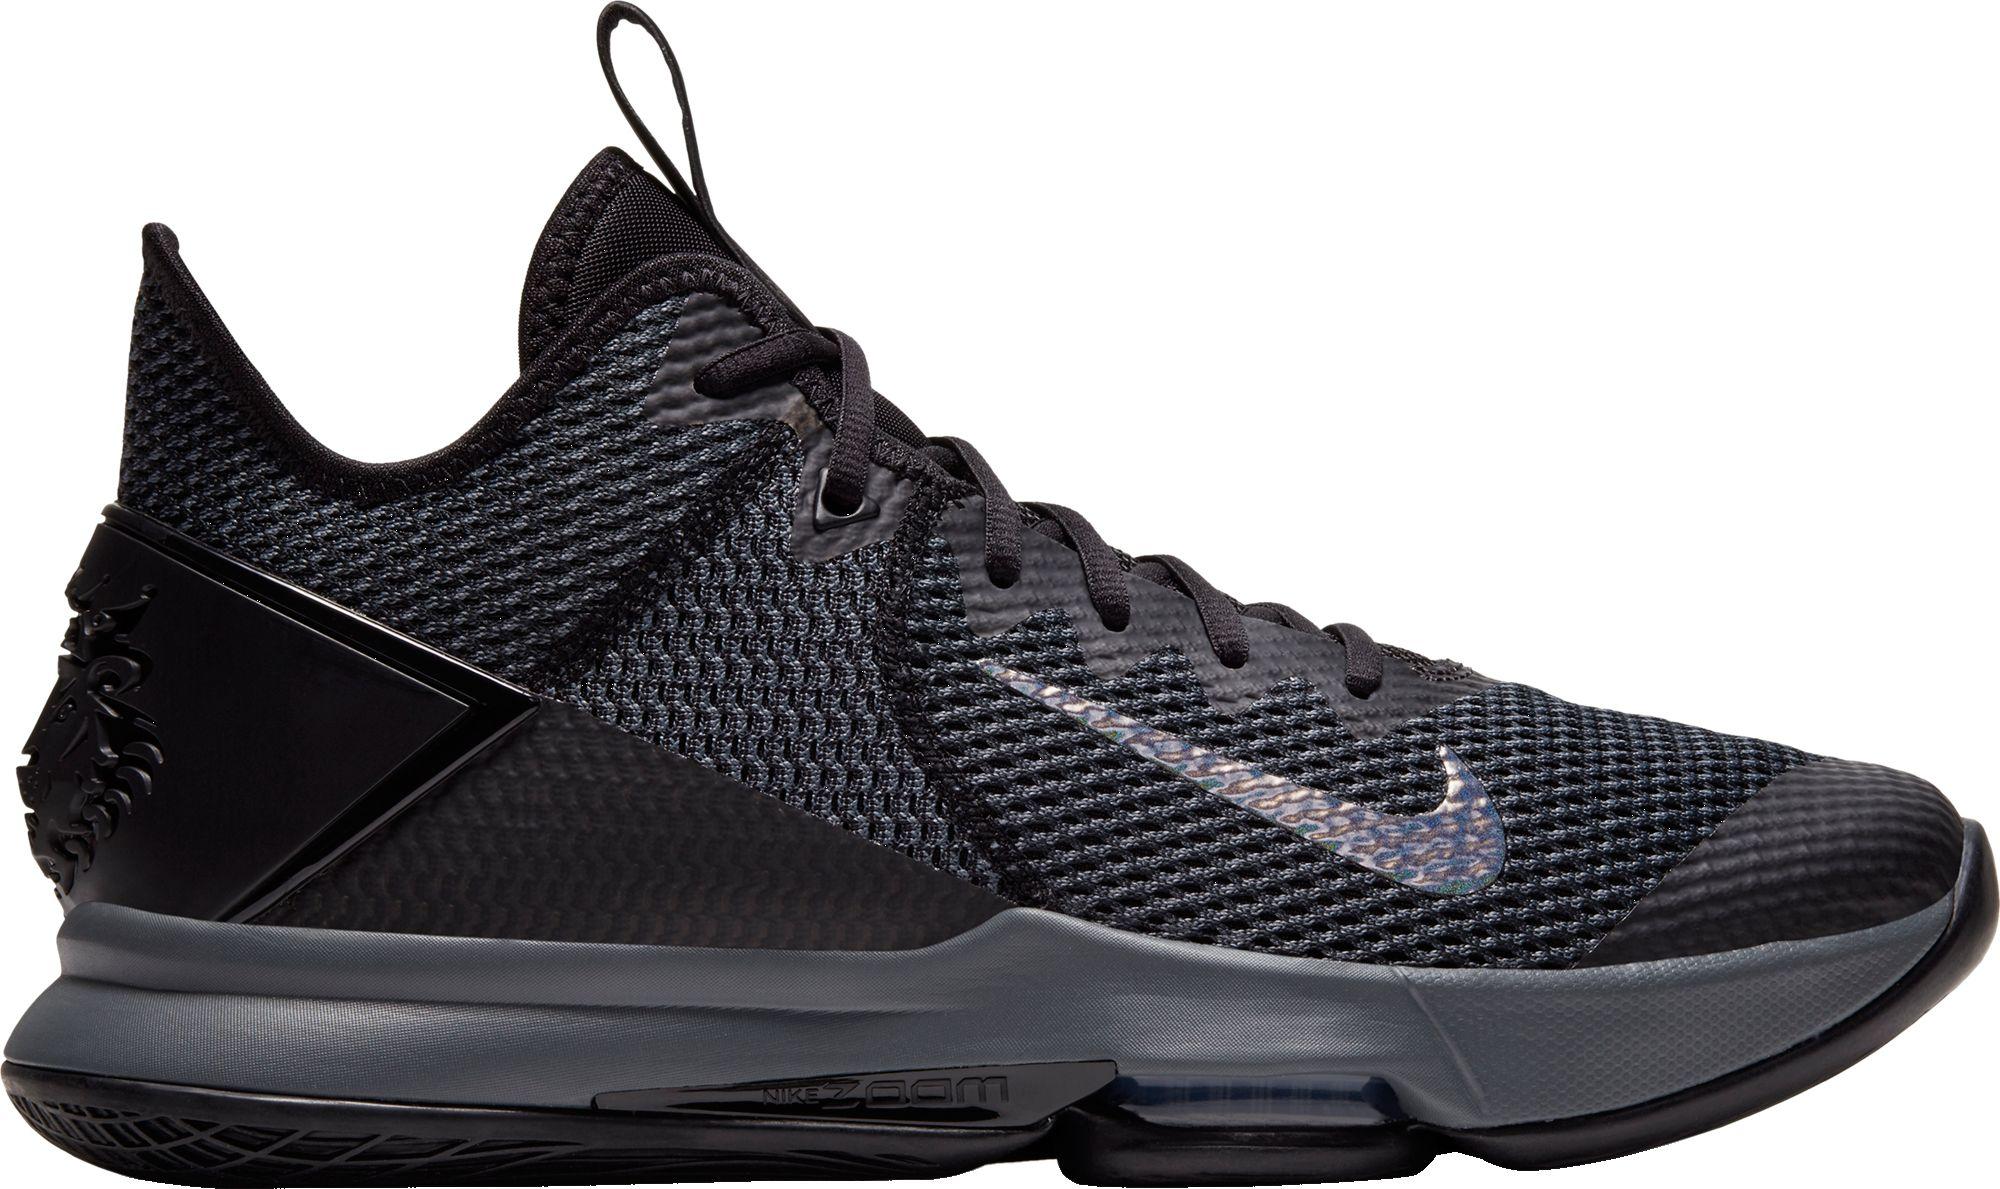 Nike Lebron Witness 4 Basketball Shoes in Black/Black Anthracite (Black ...